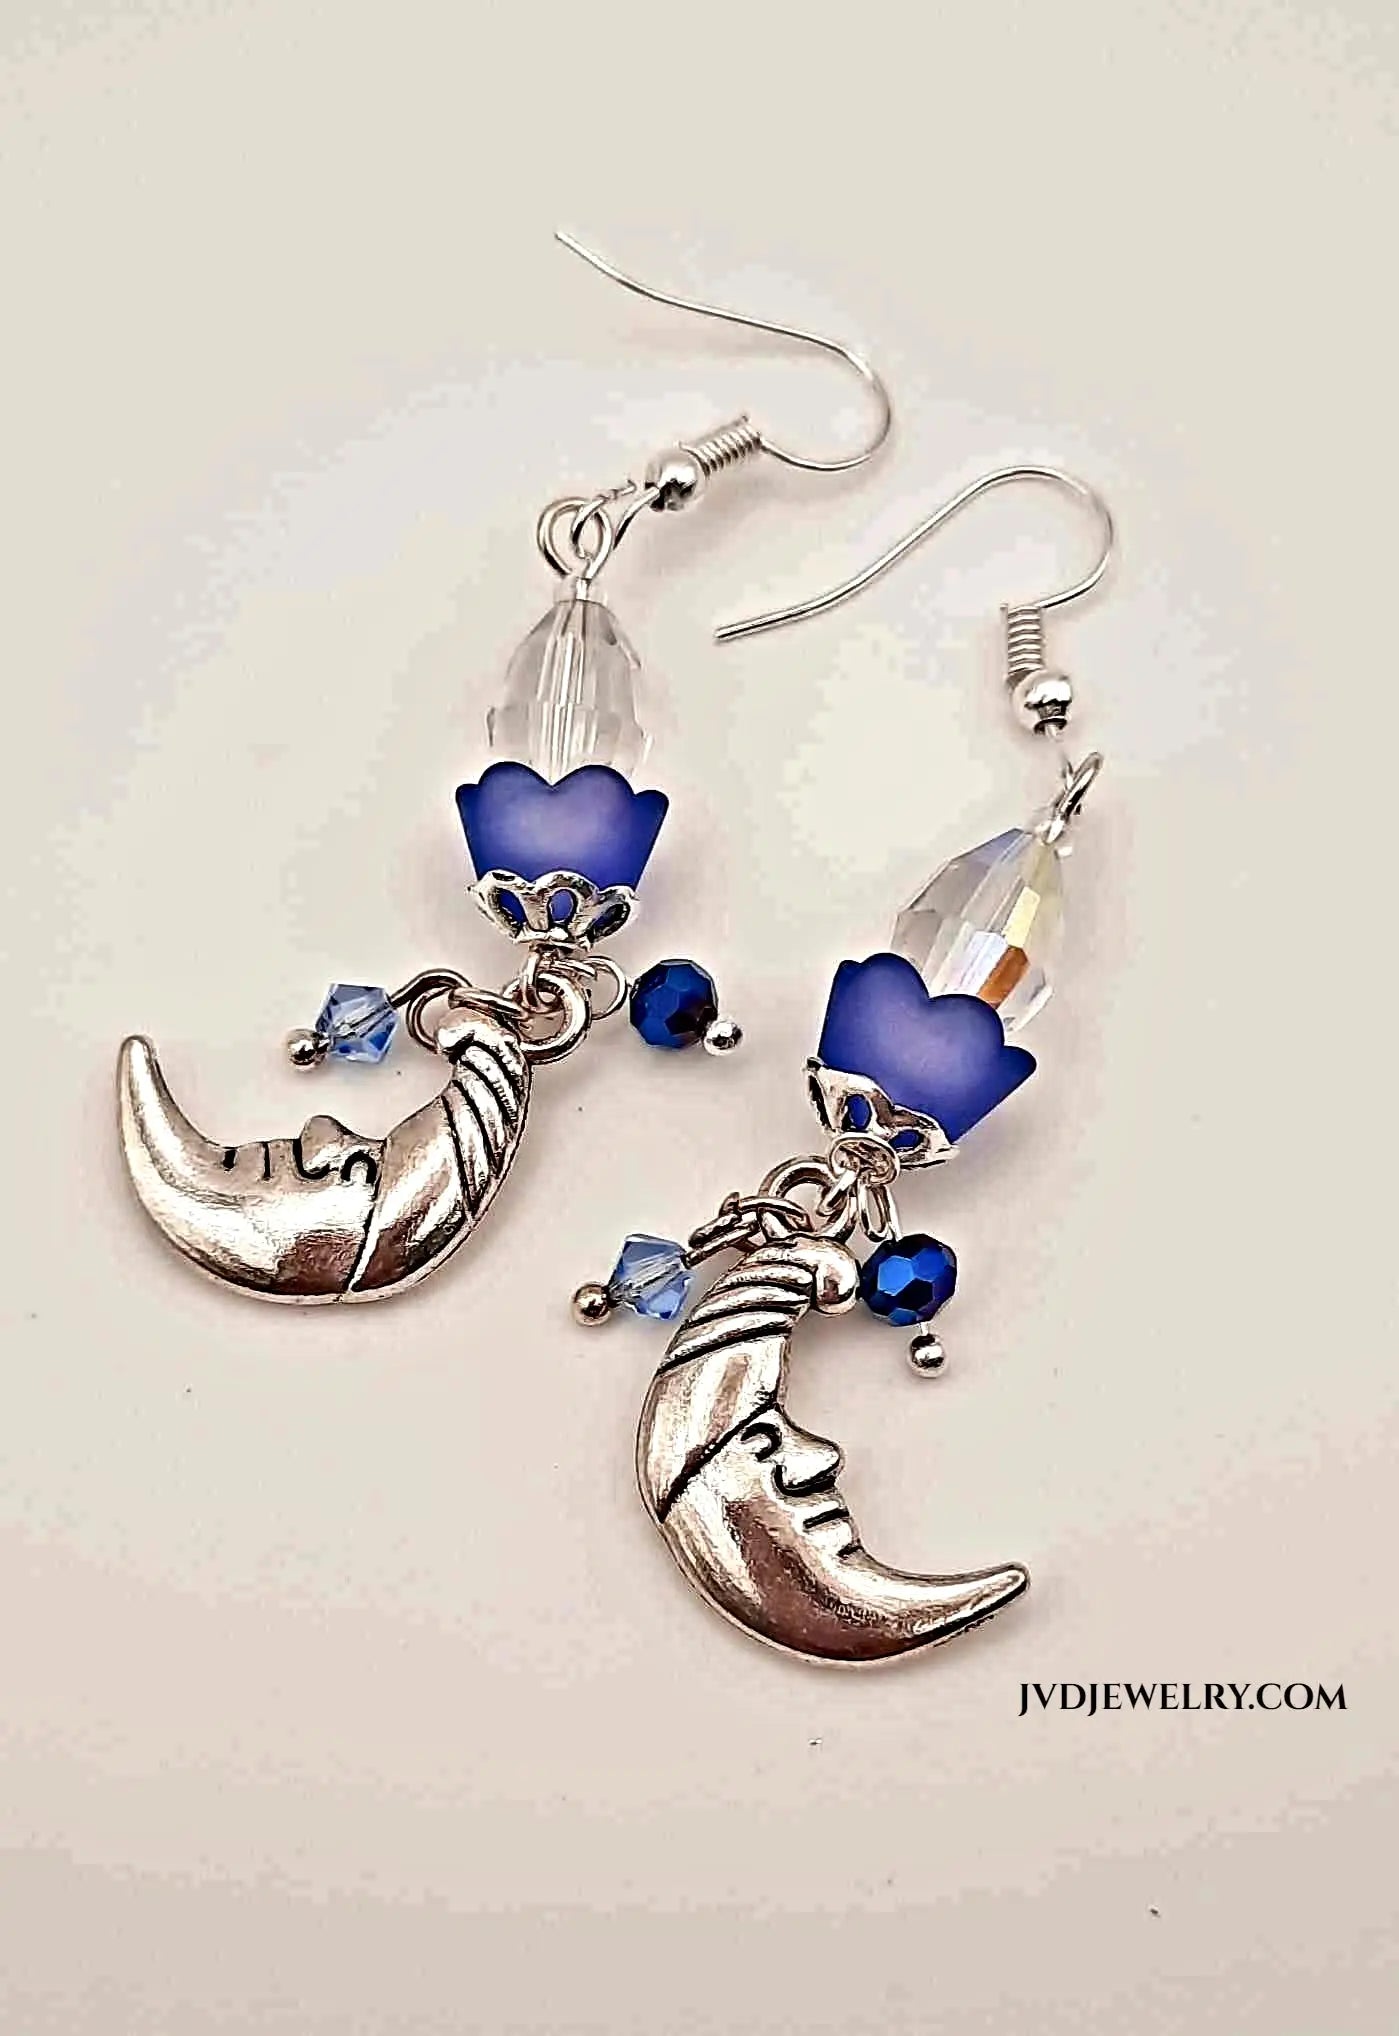 silver moon face charm earrings - Image #1